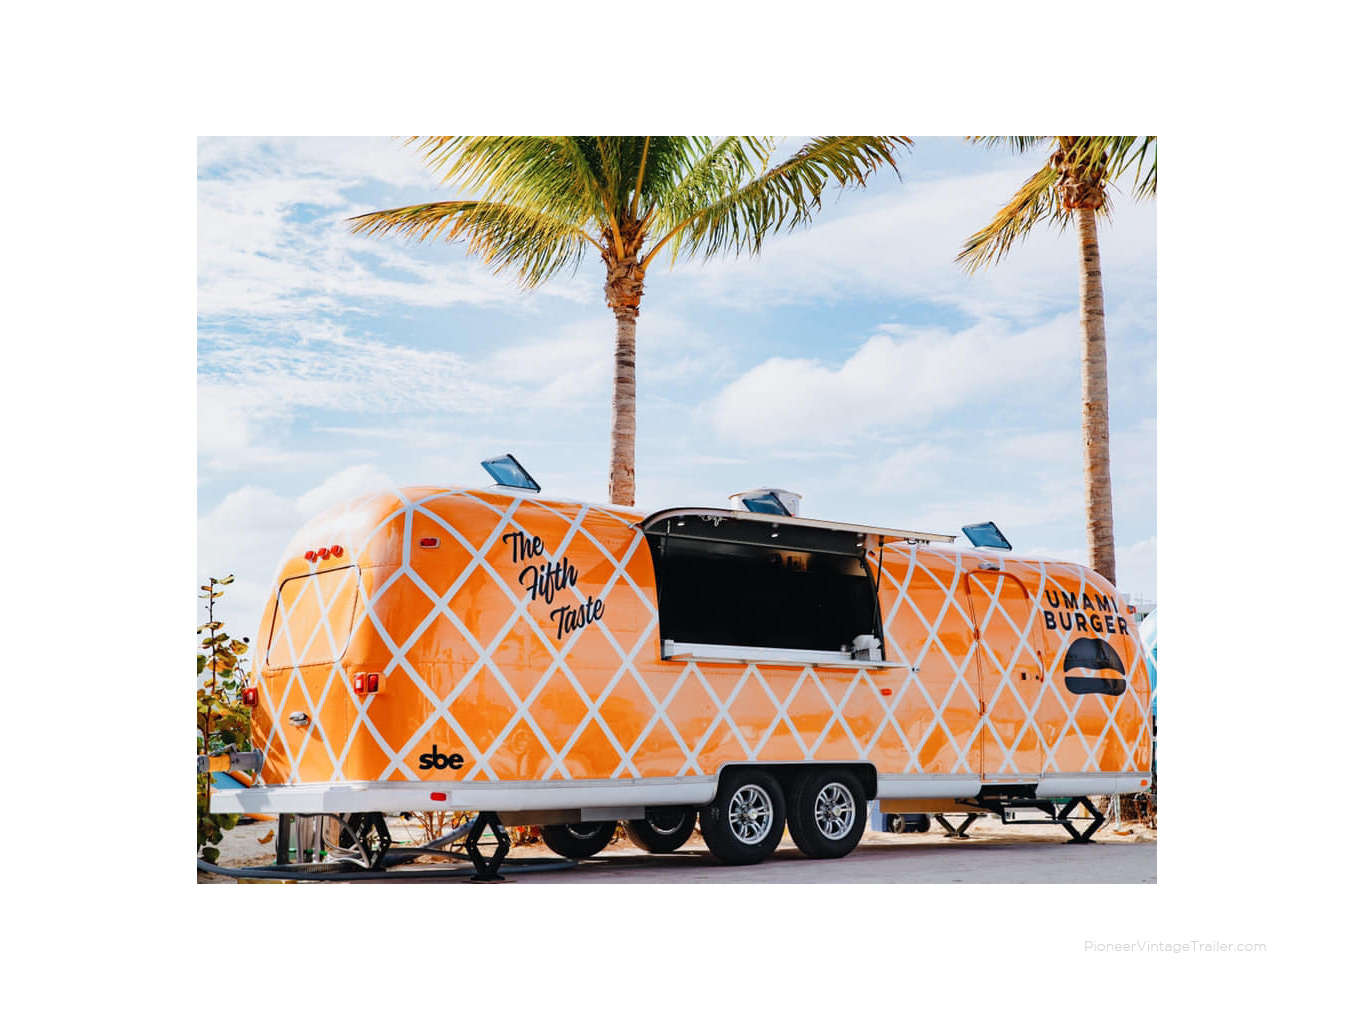 Airstream Umami Burger in Bahamas - food truck